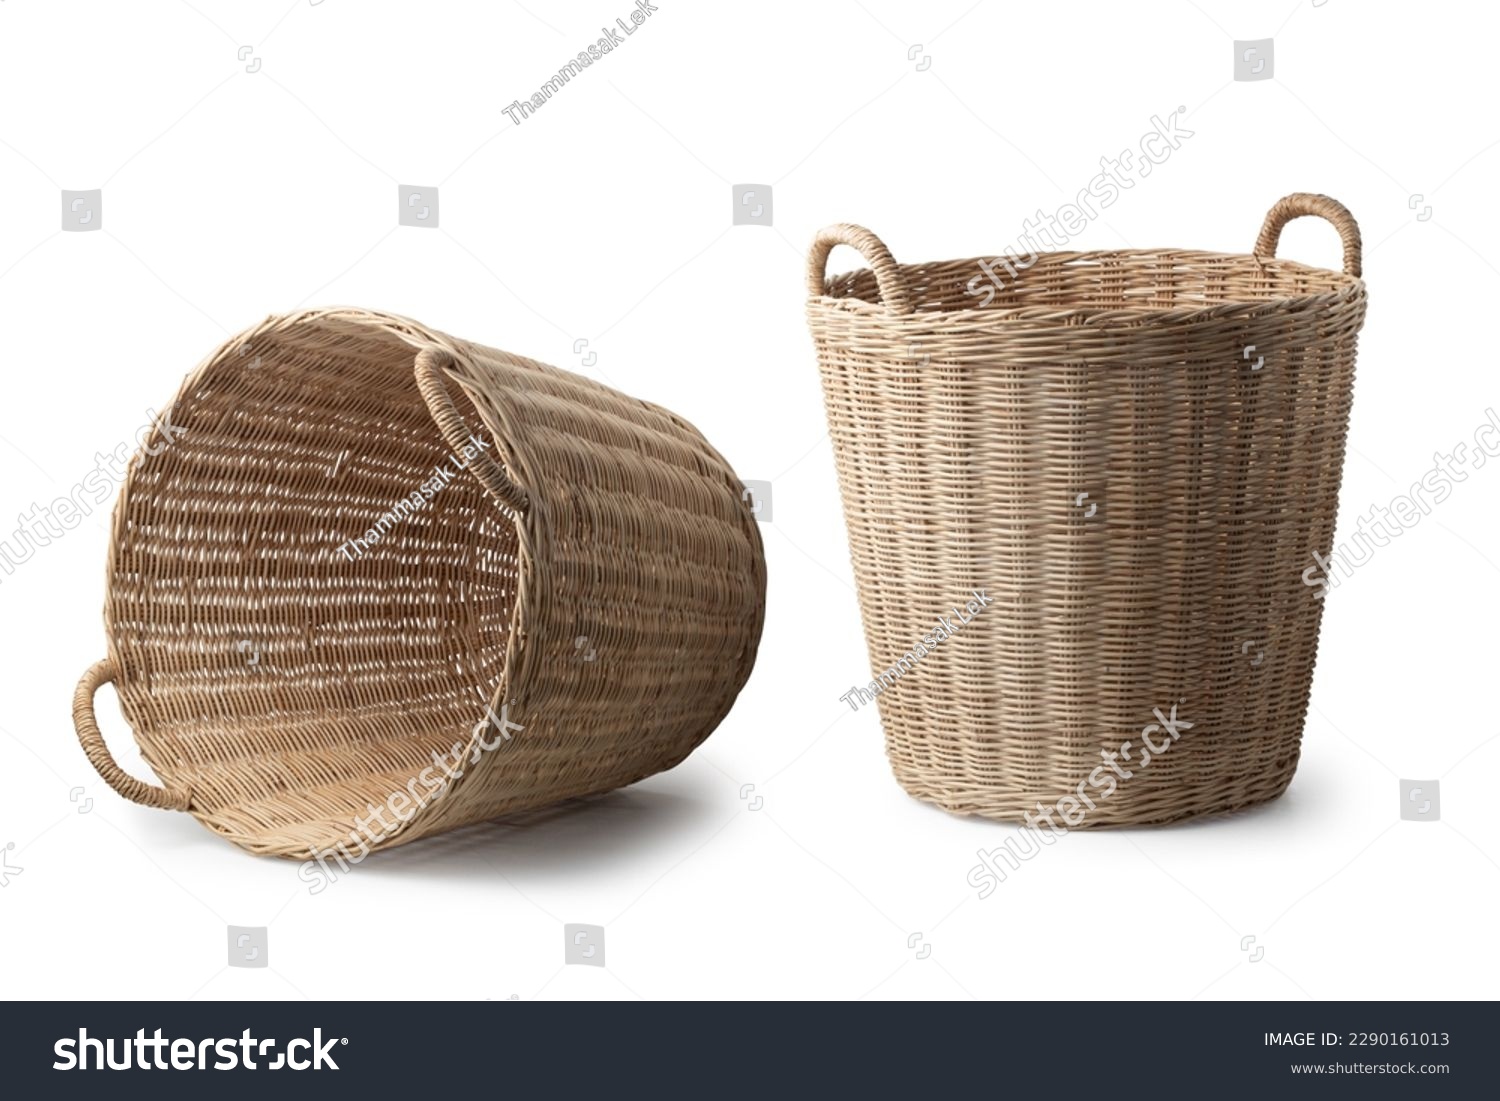 Empty wooden wicker basket on white background #2290161013